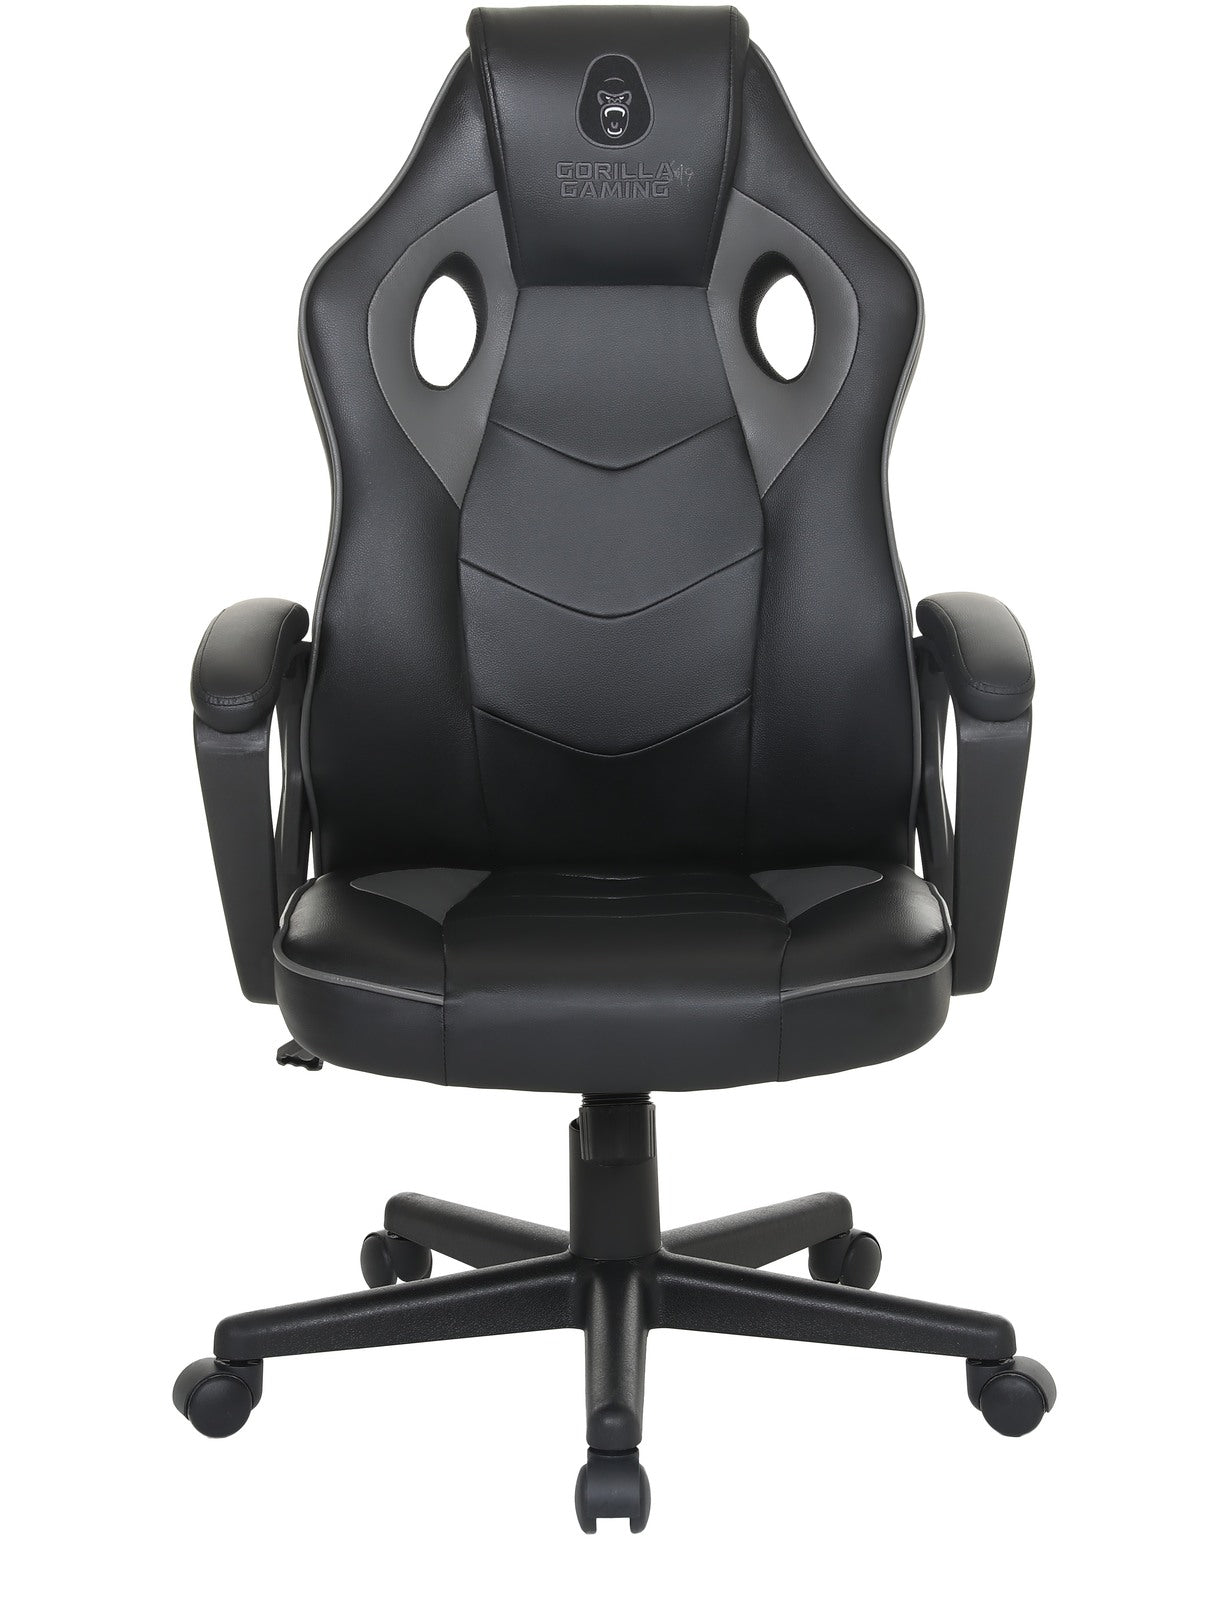 Gorilla Gaming Chair - Black/Grey - Xbox Series X